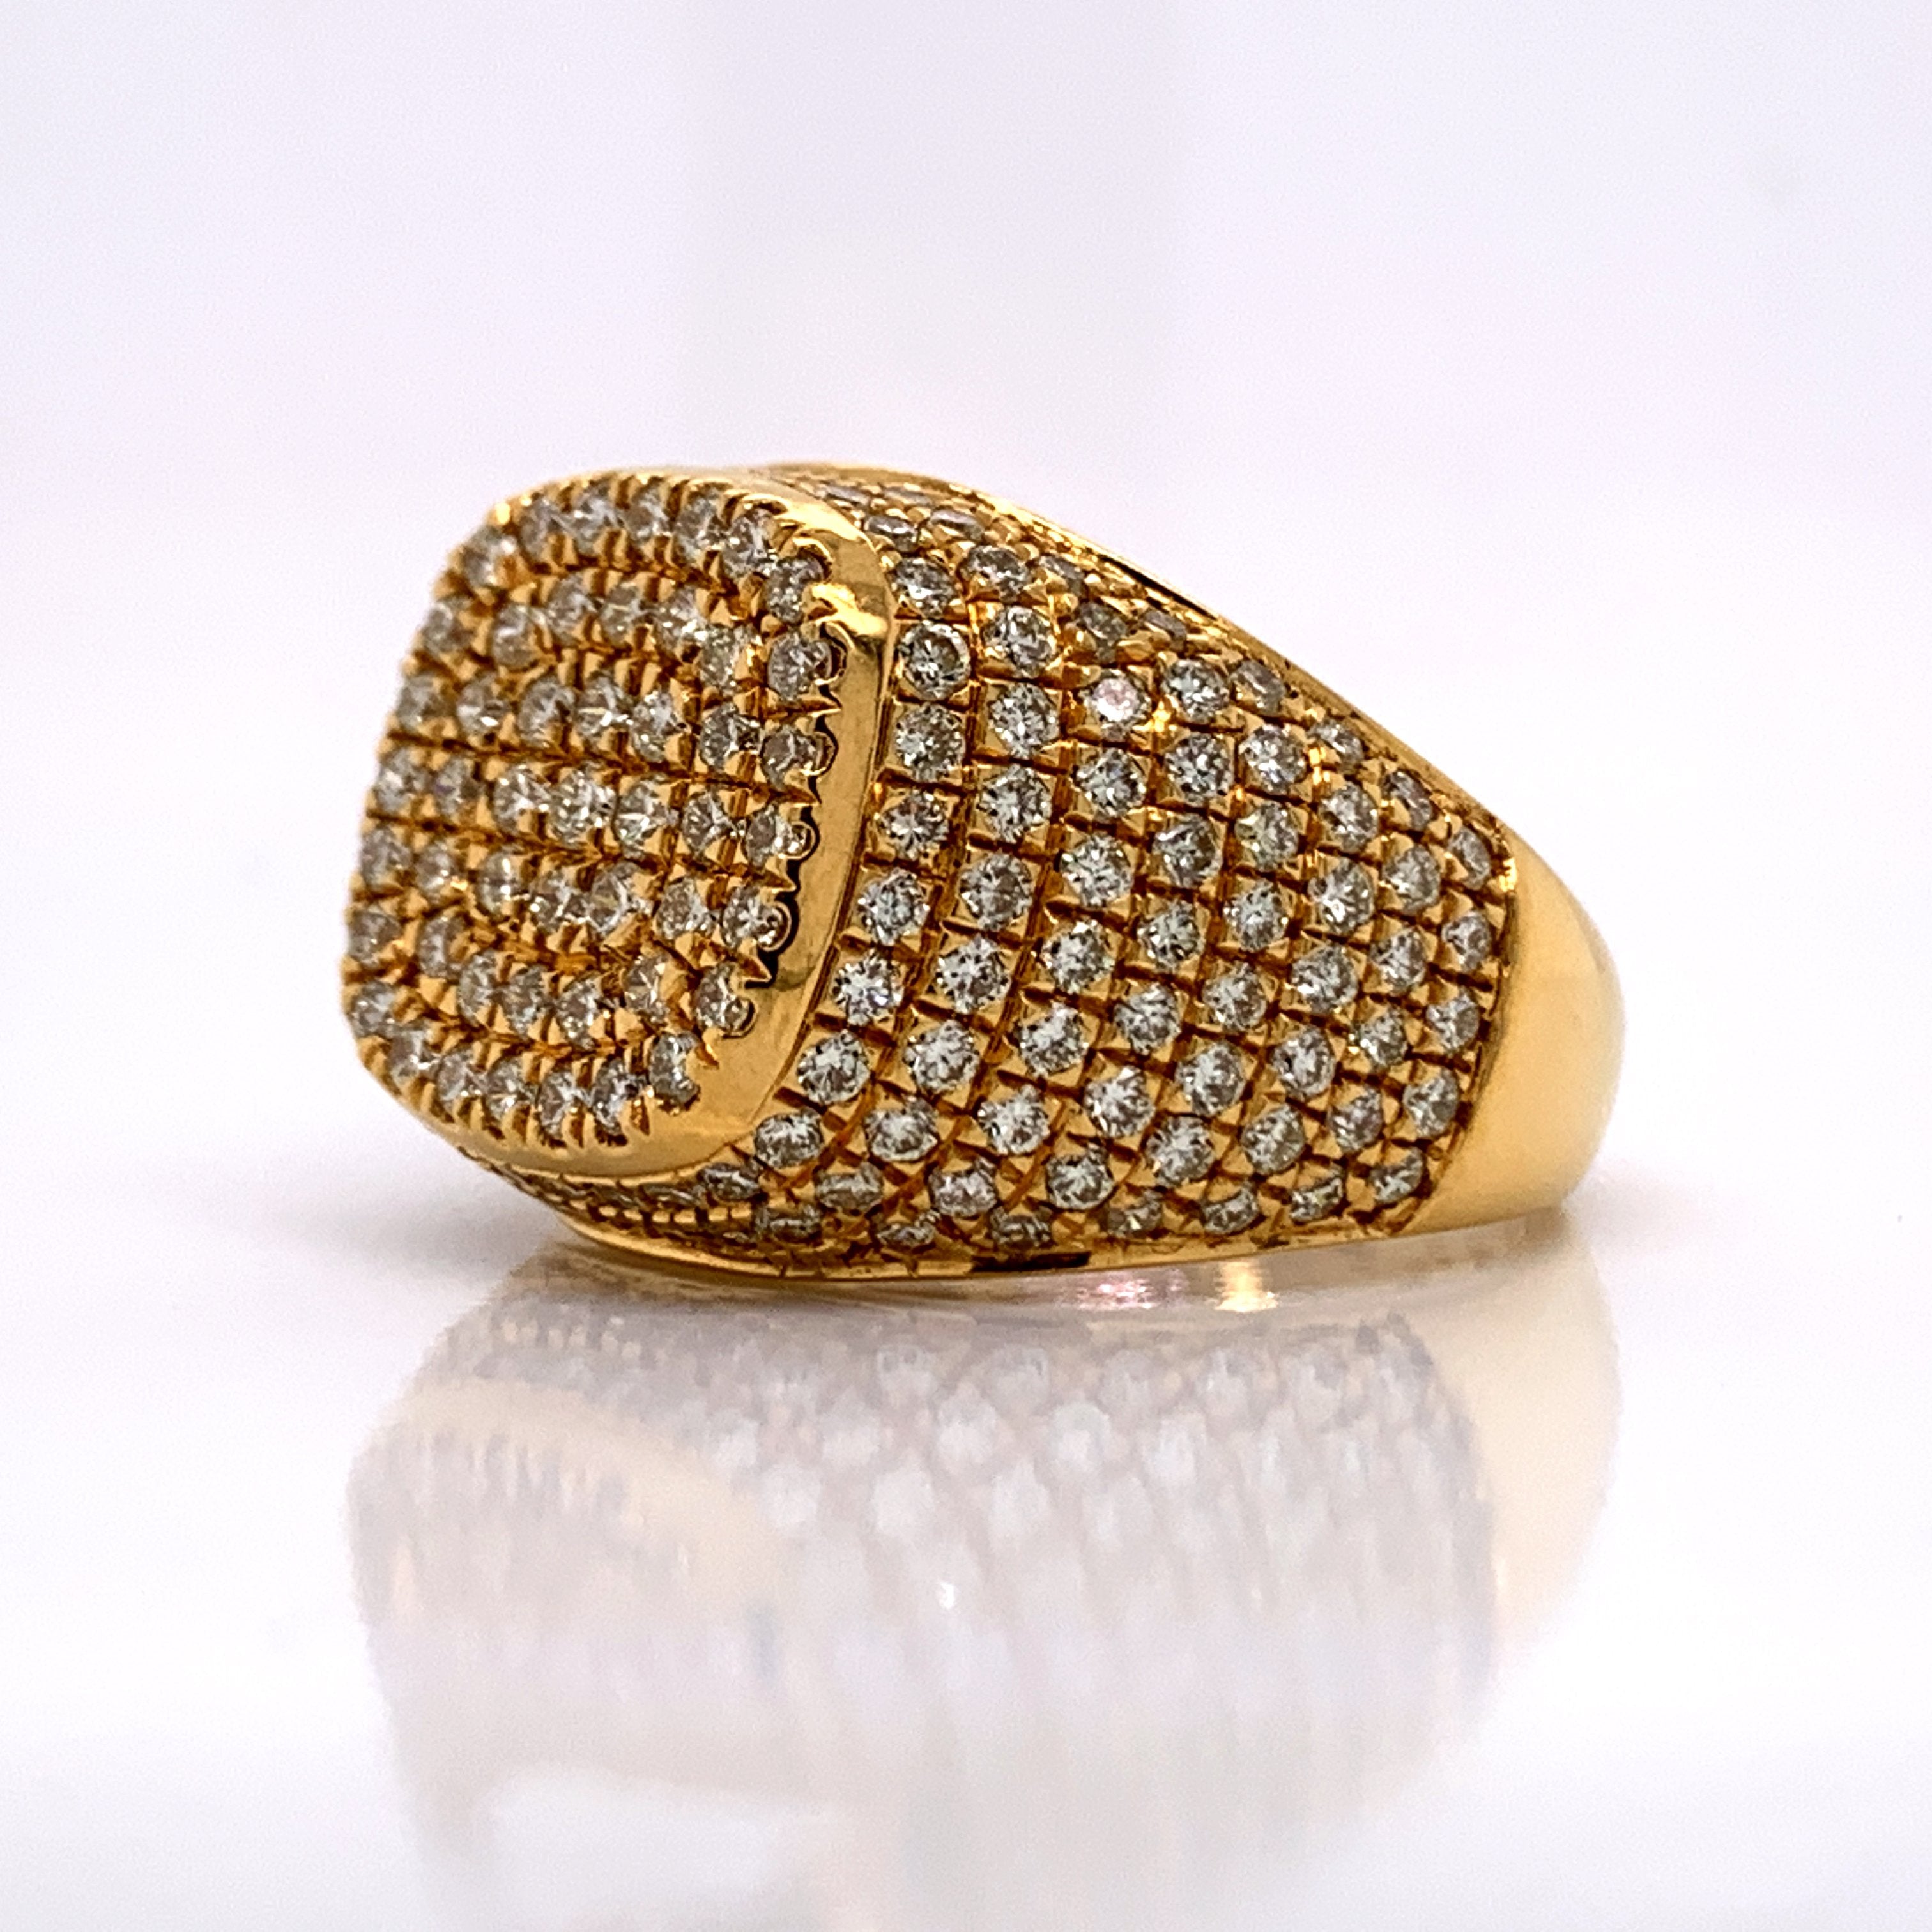 3.02 CT. Diamond Ring in 10K Gold - White Carat Diamonds 